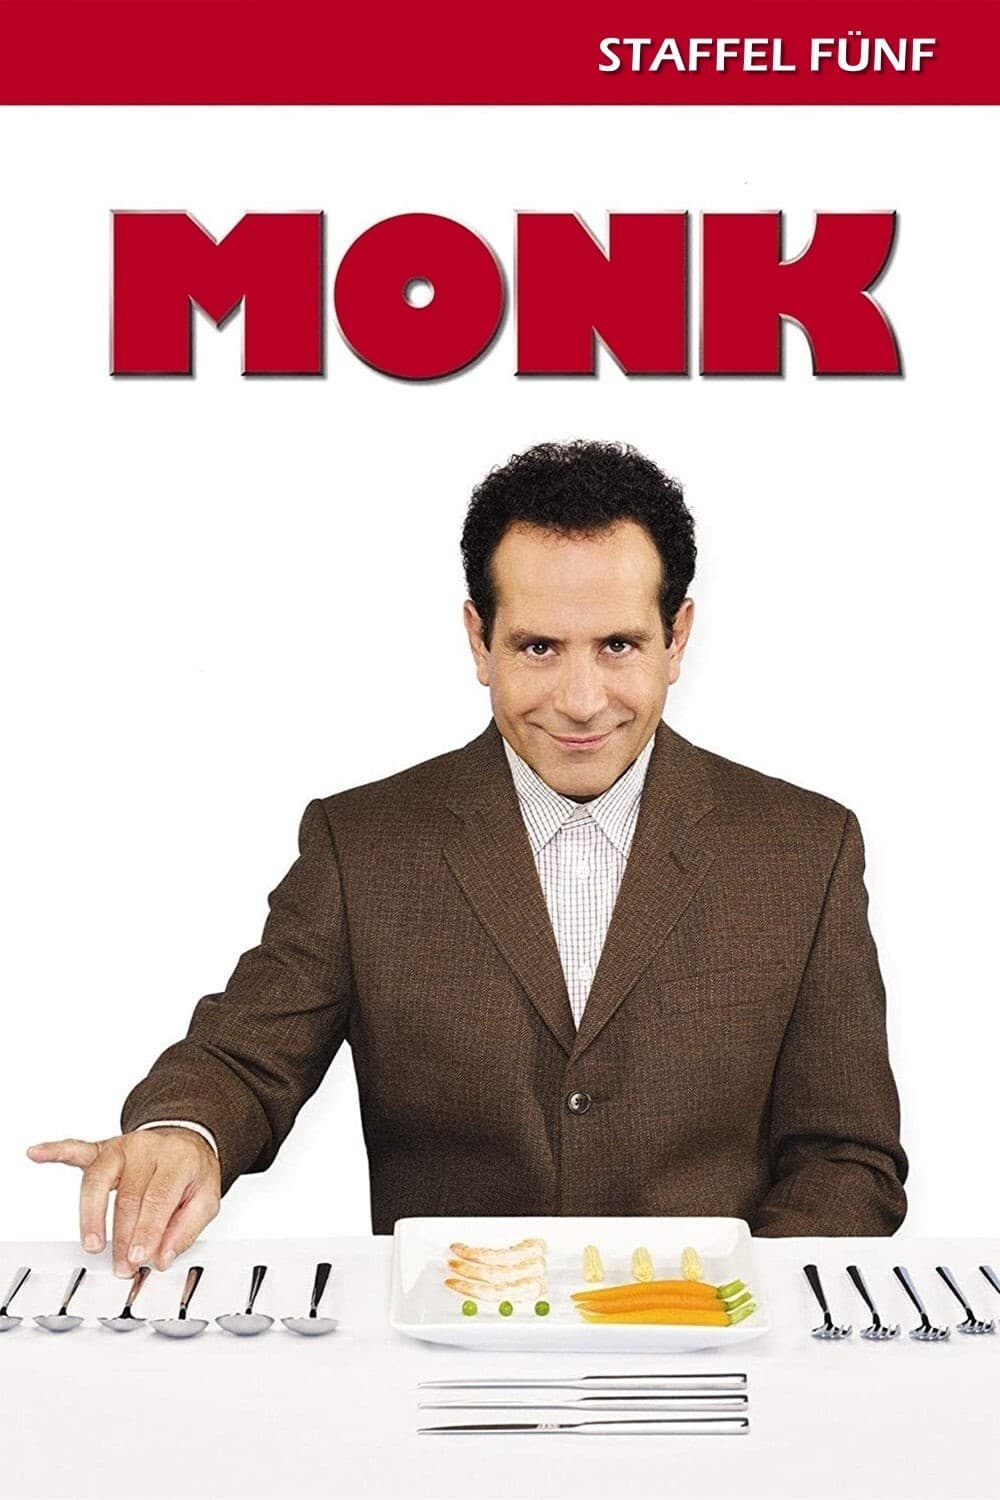 Monk Season 5